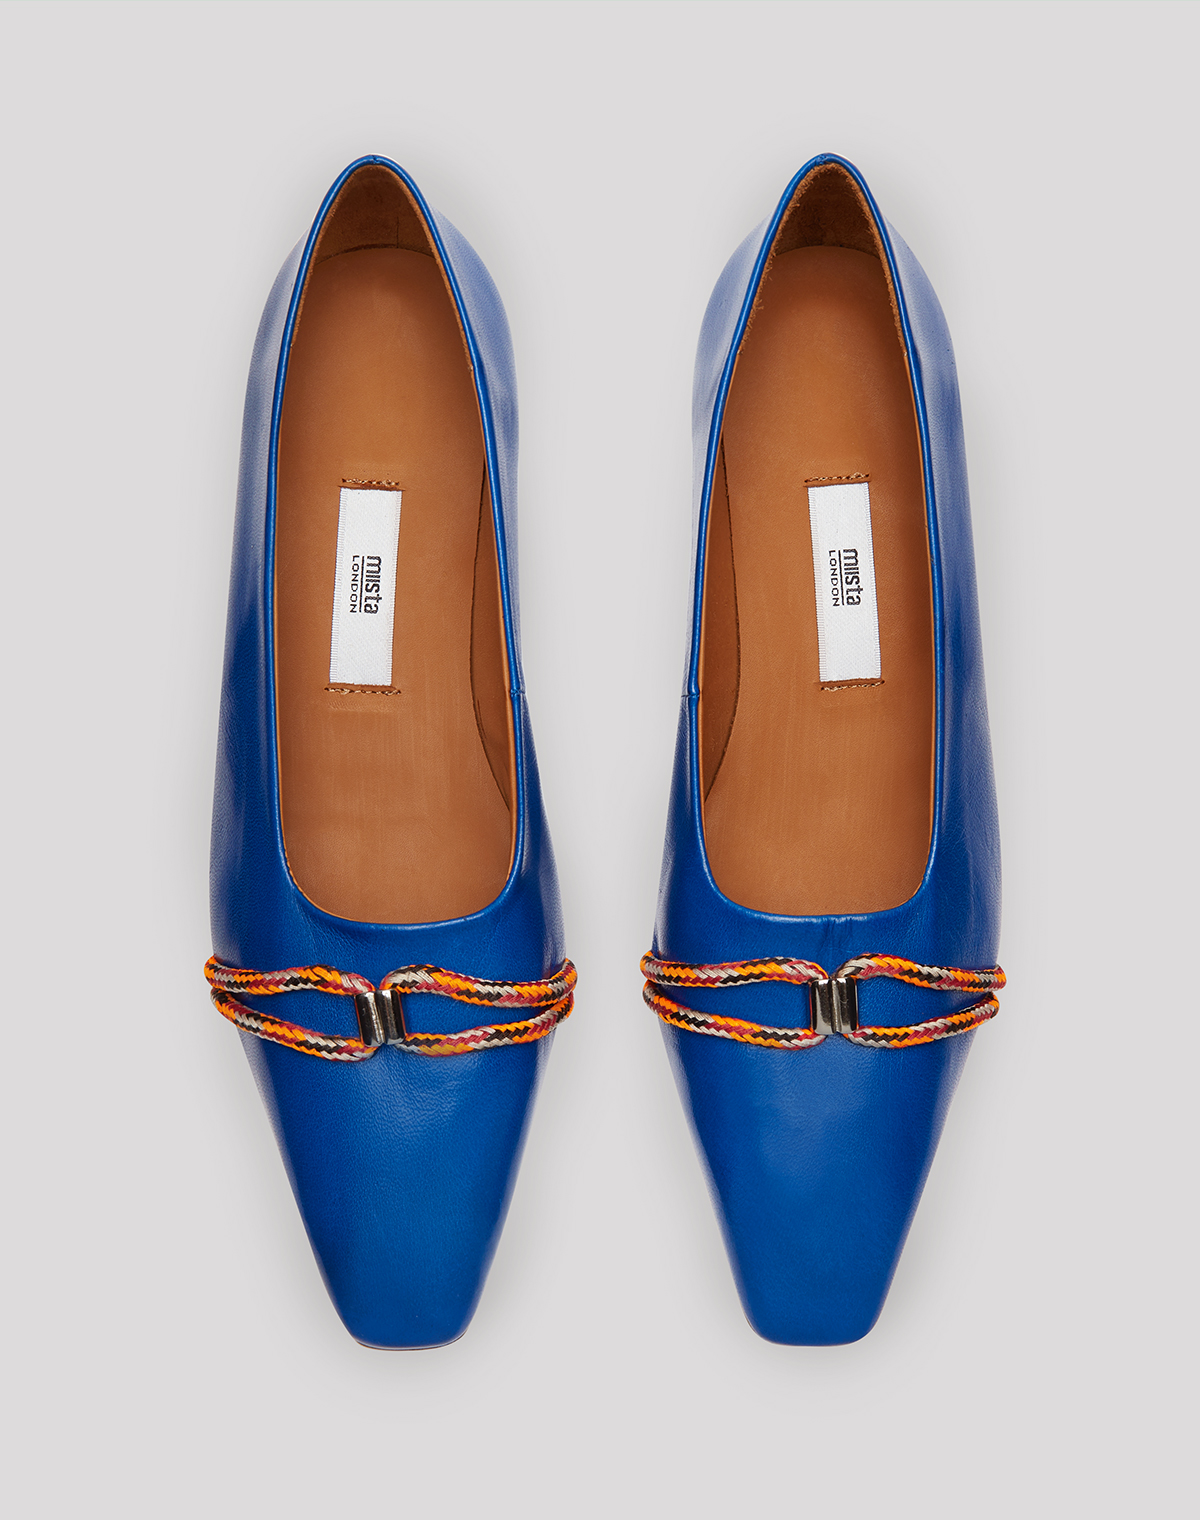 royal blue court heels